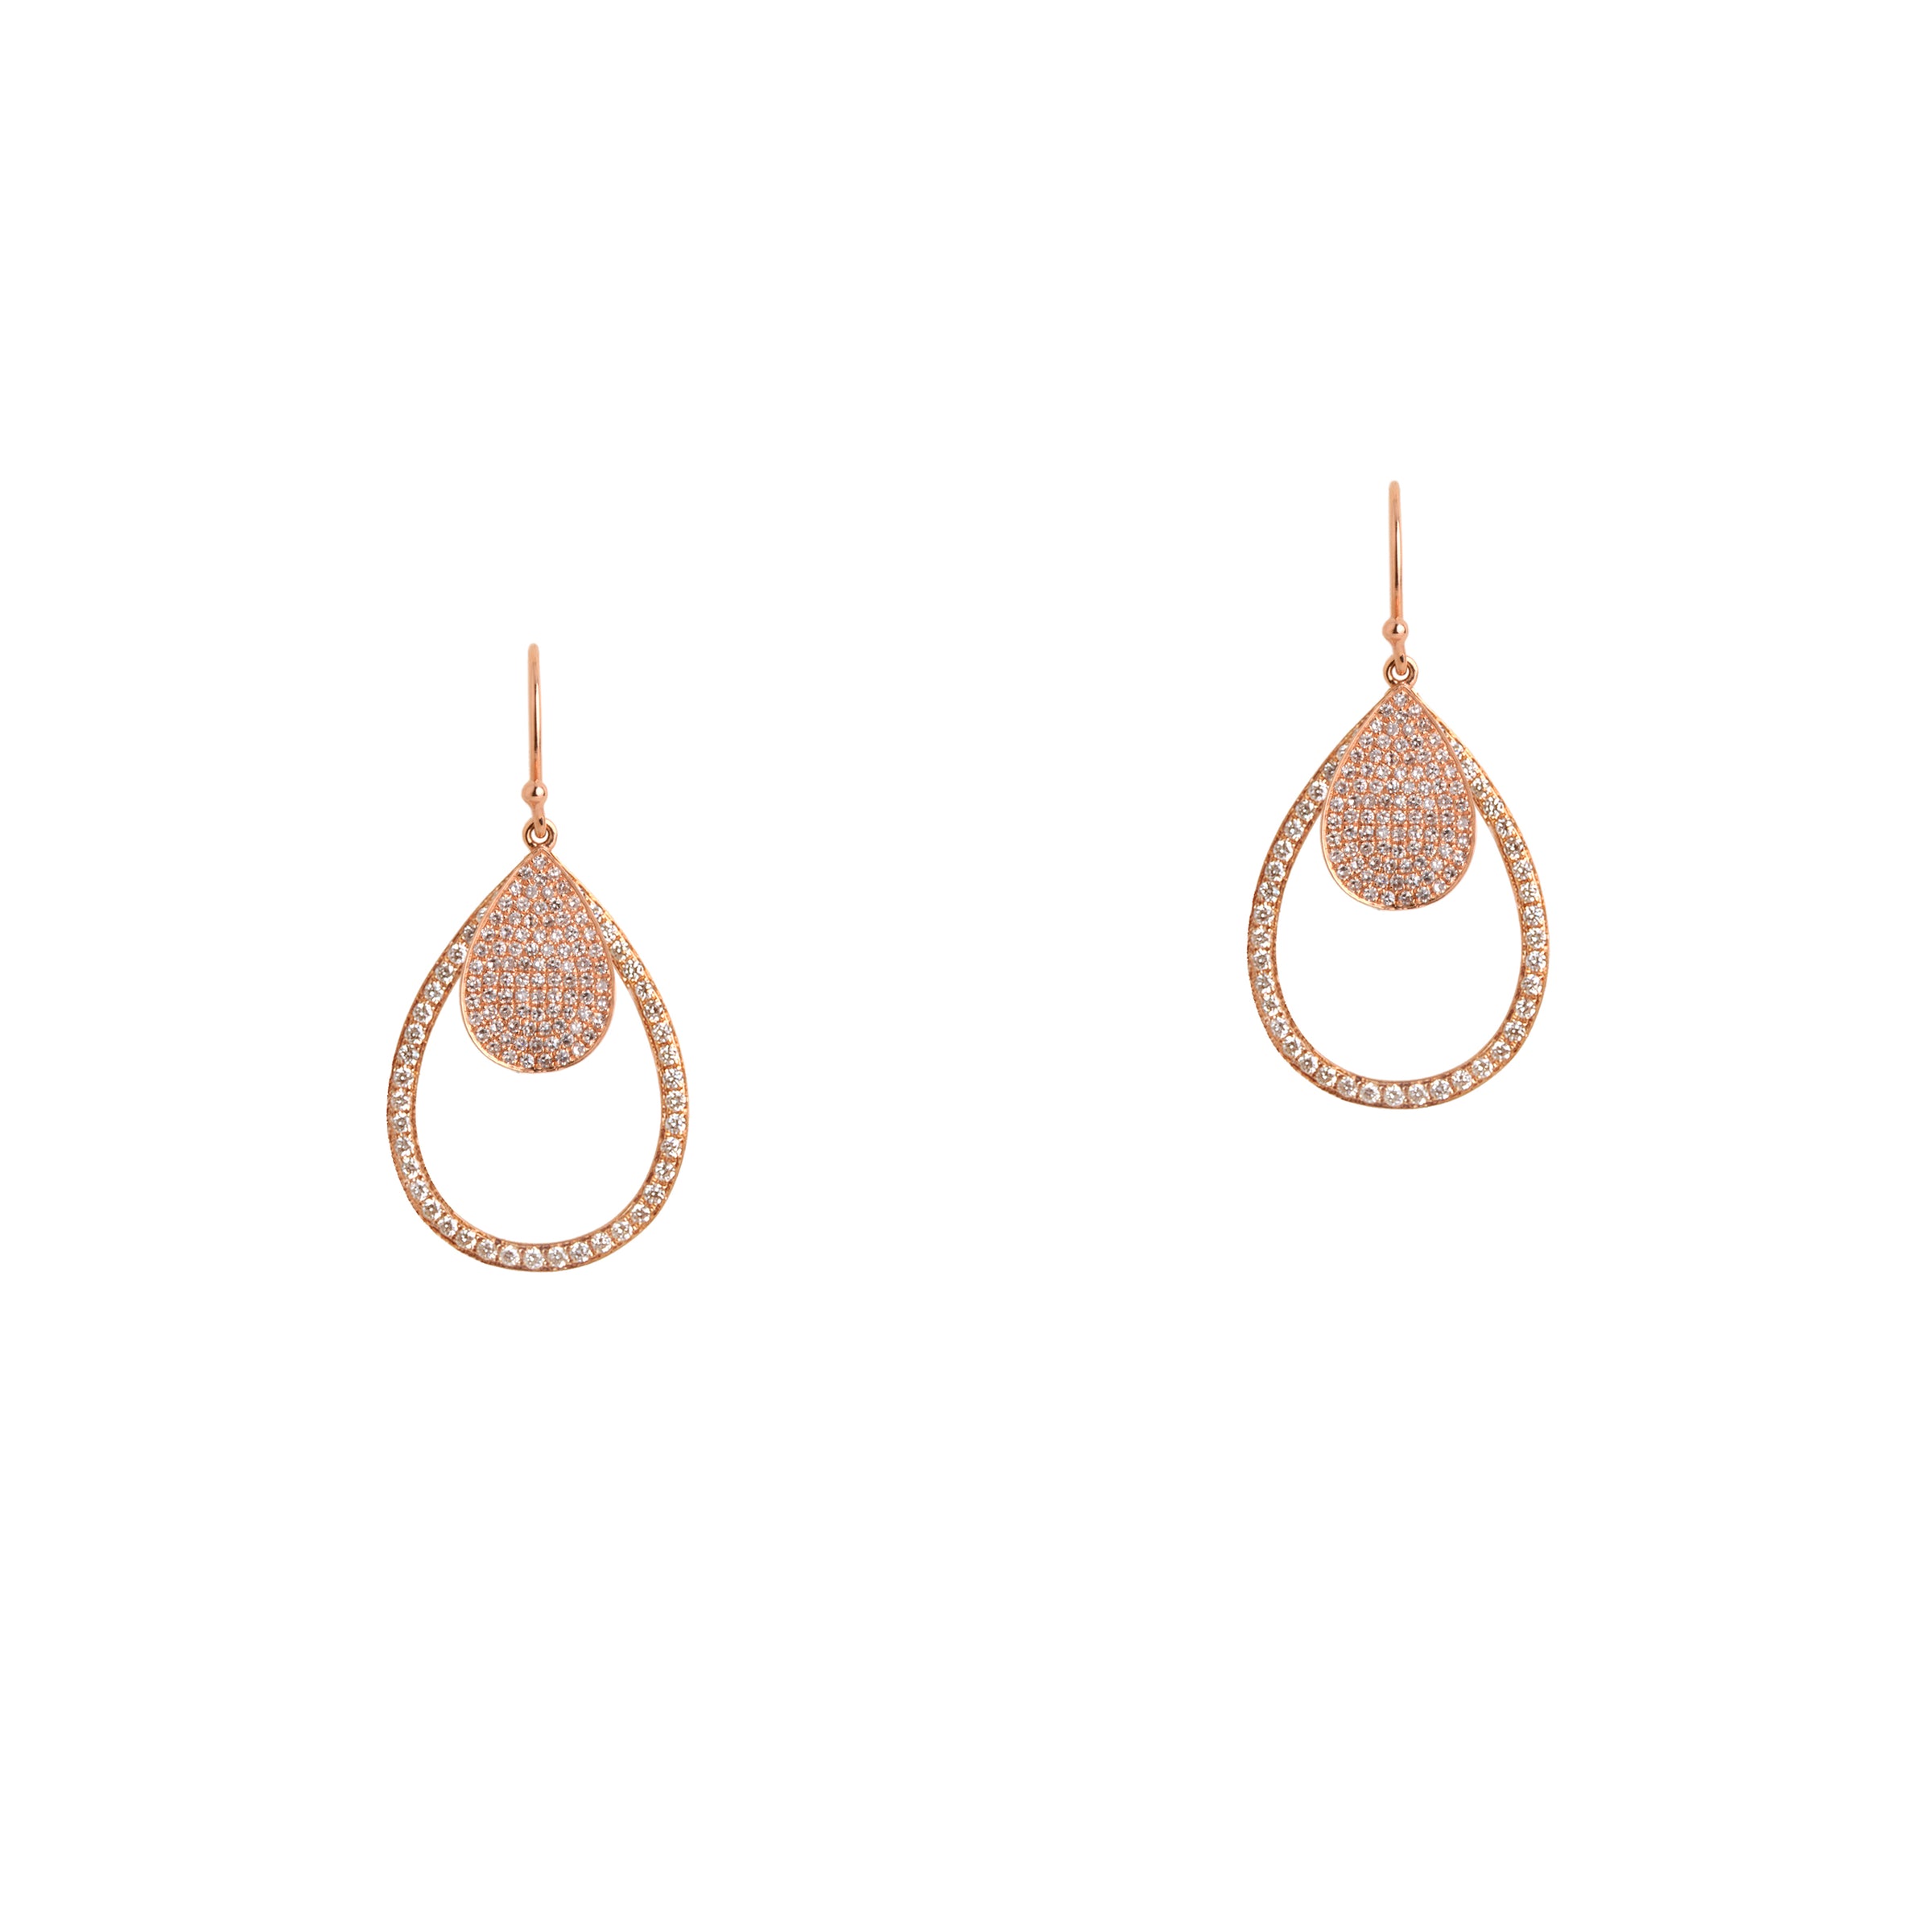 MINI PAVÉ & SMALL DIAMOND TEARDROPS - Bridget King Jewelry